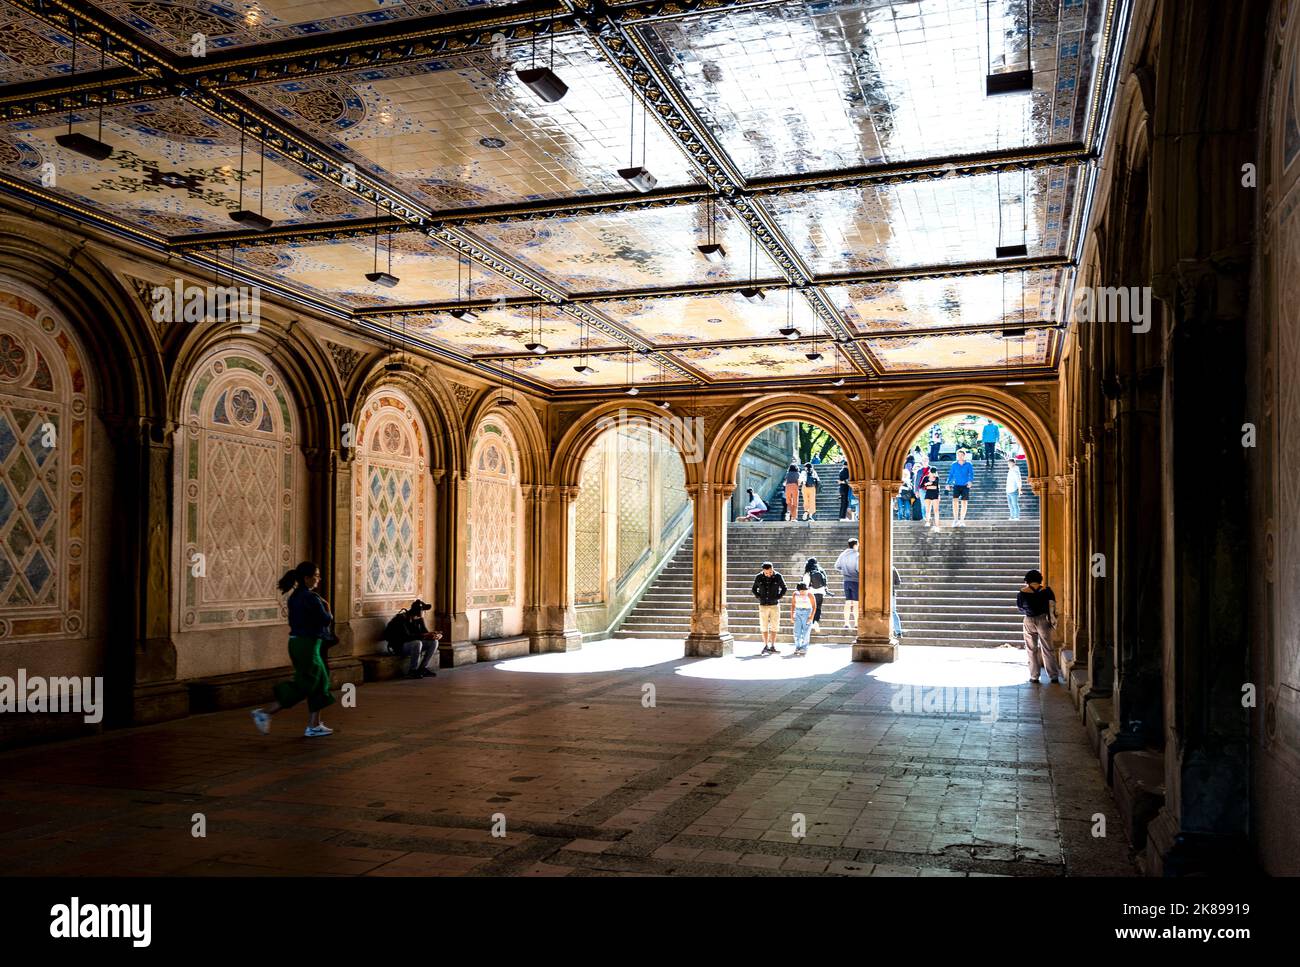 Inside Central Park: The Arcade at Bethesda Terrace